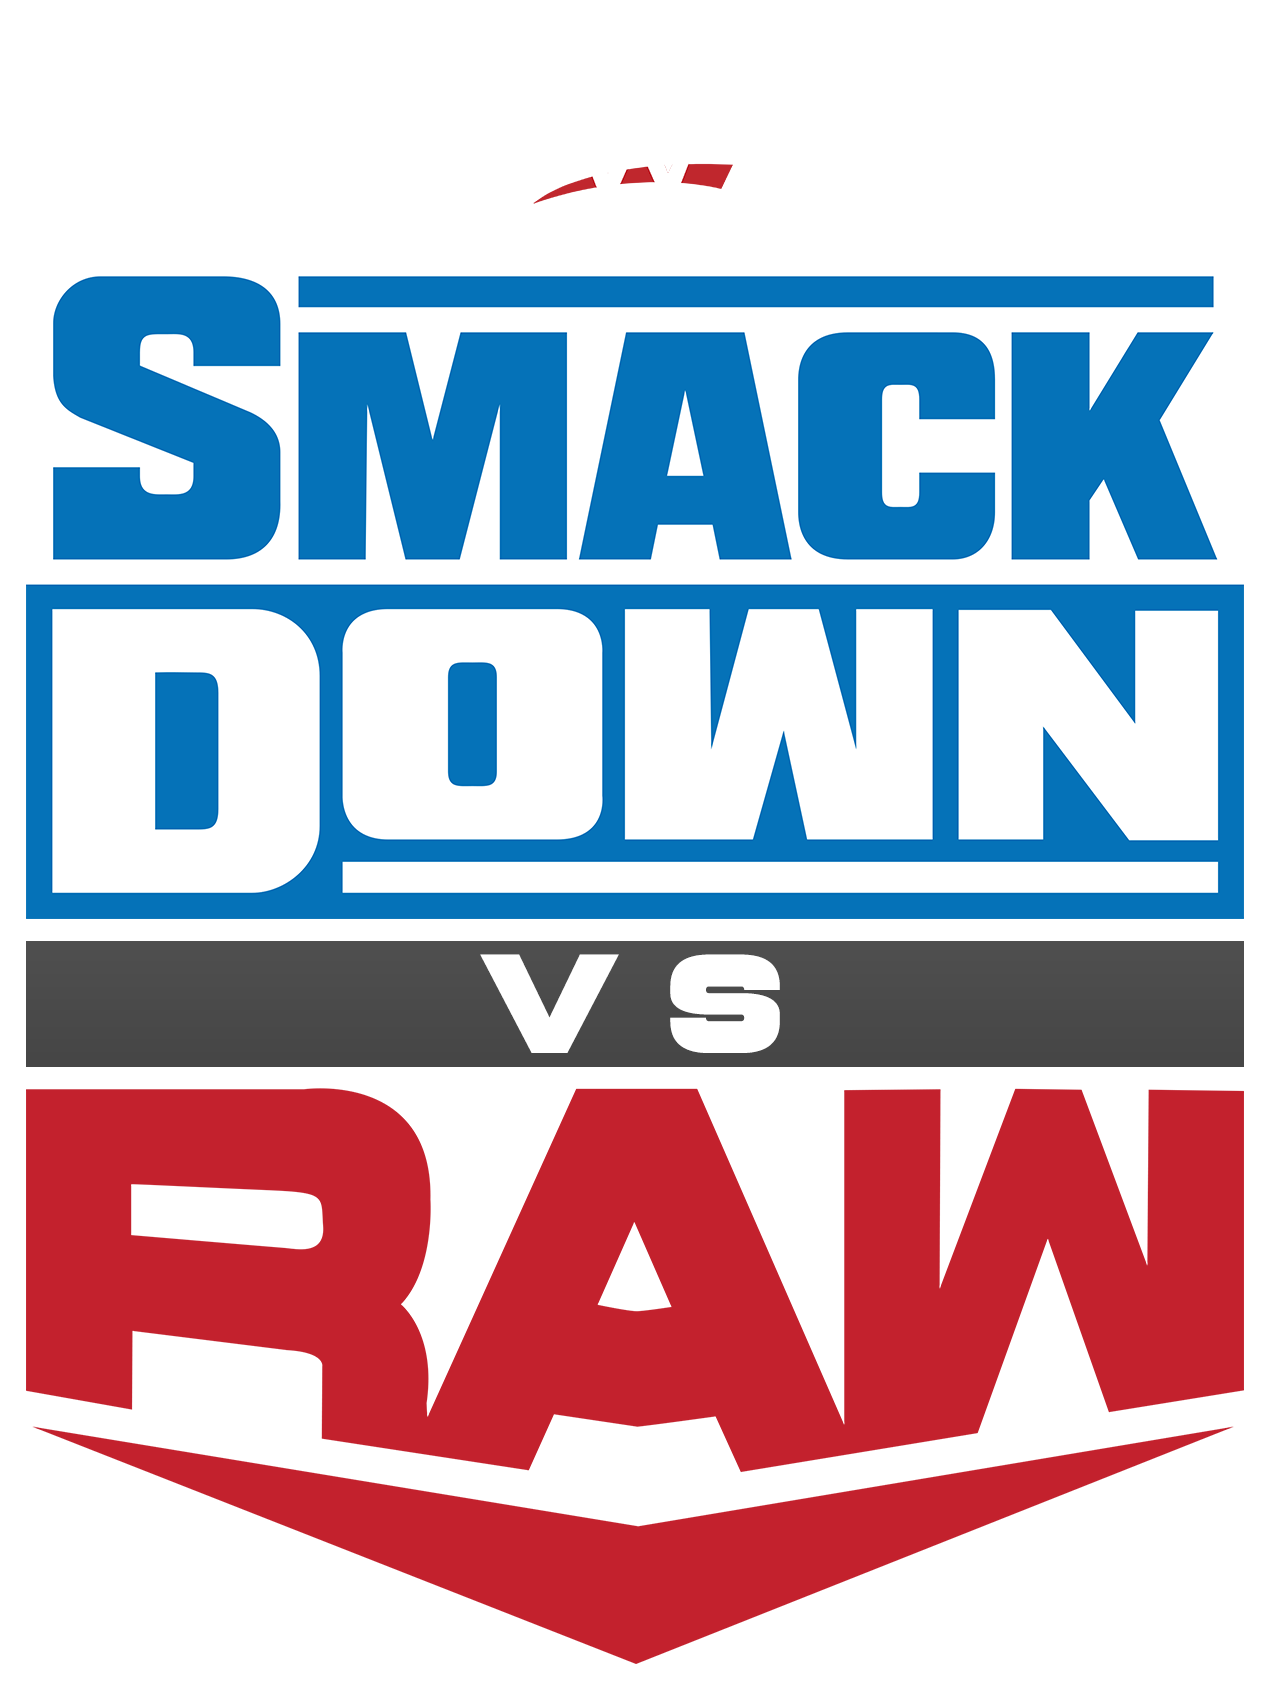 wwe smackdown logo